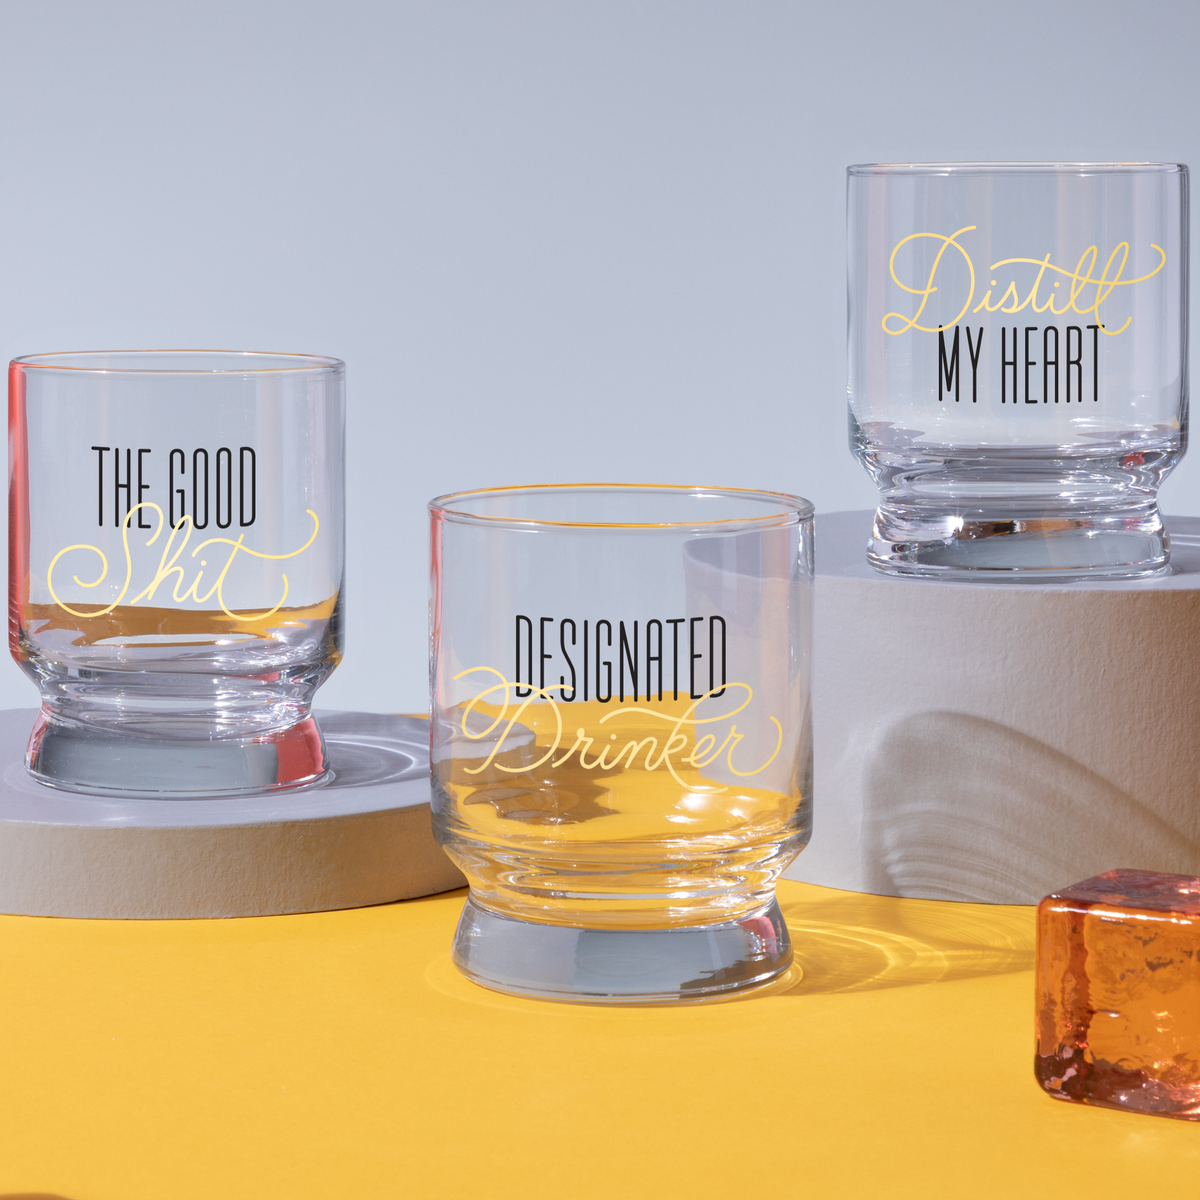 Shot Glasses with Volumetric Measurements – The Lawful Good